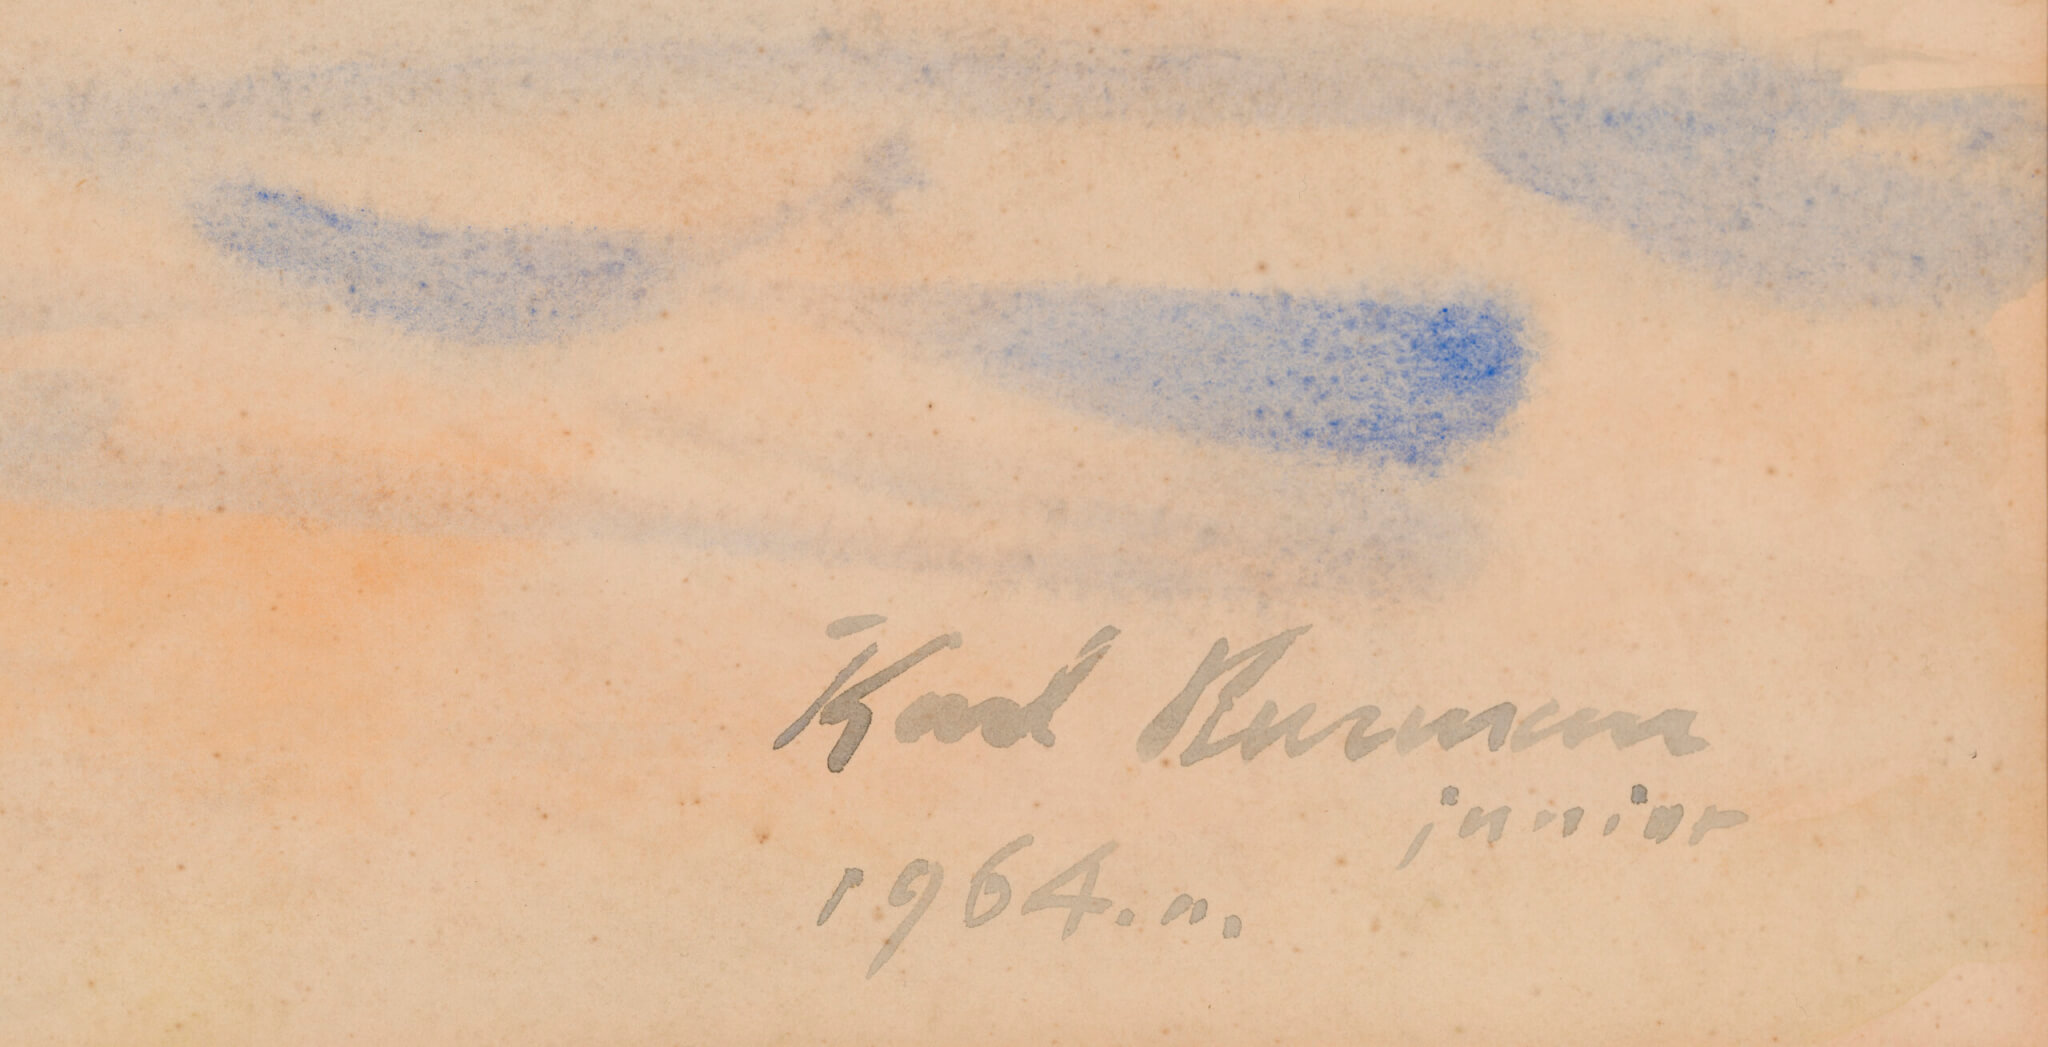 Karl Burman Junior “Õhtune Tallinna vaade”, 1964. 43 x 62 cm.